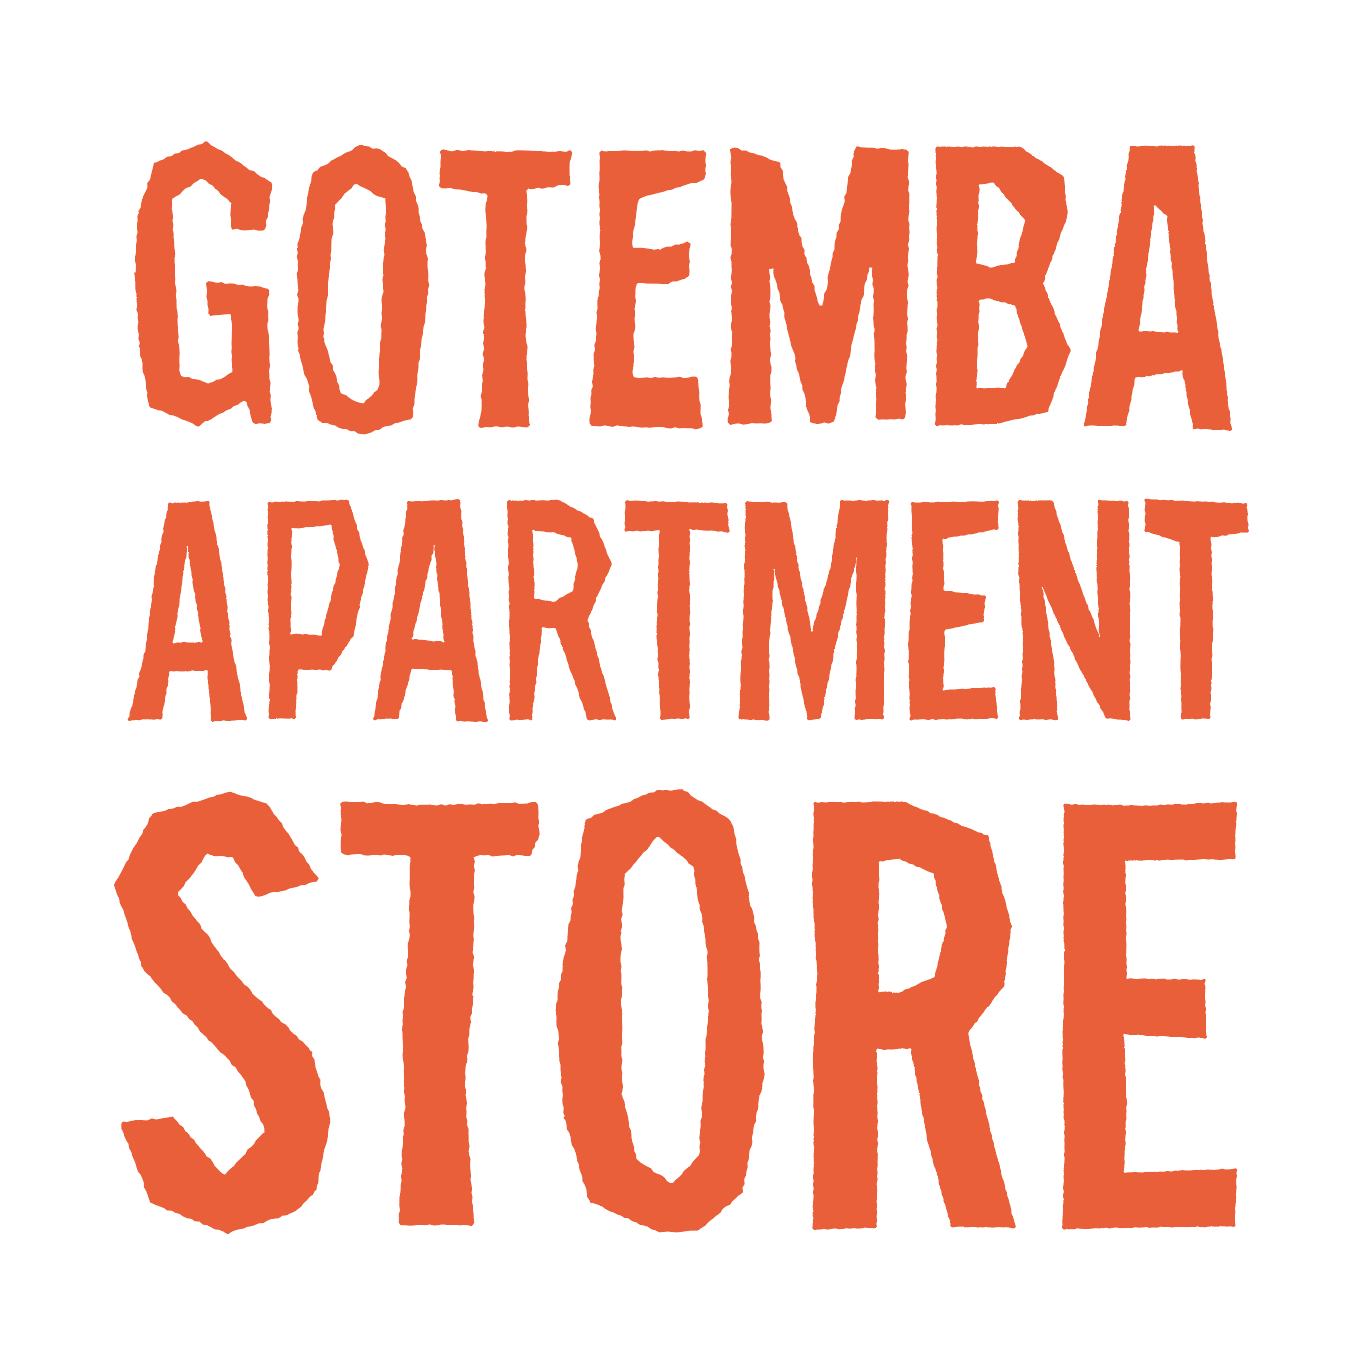 Gotemba Apartment store